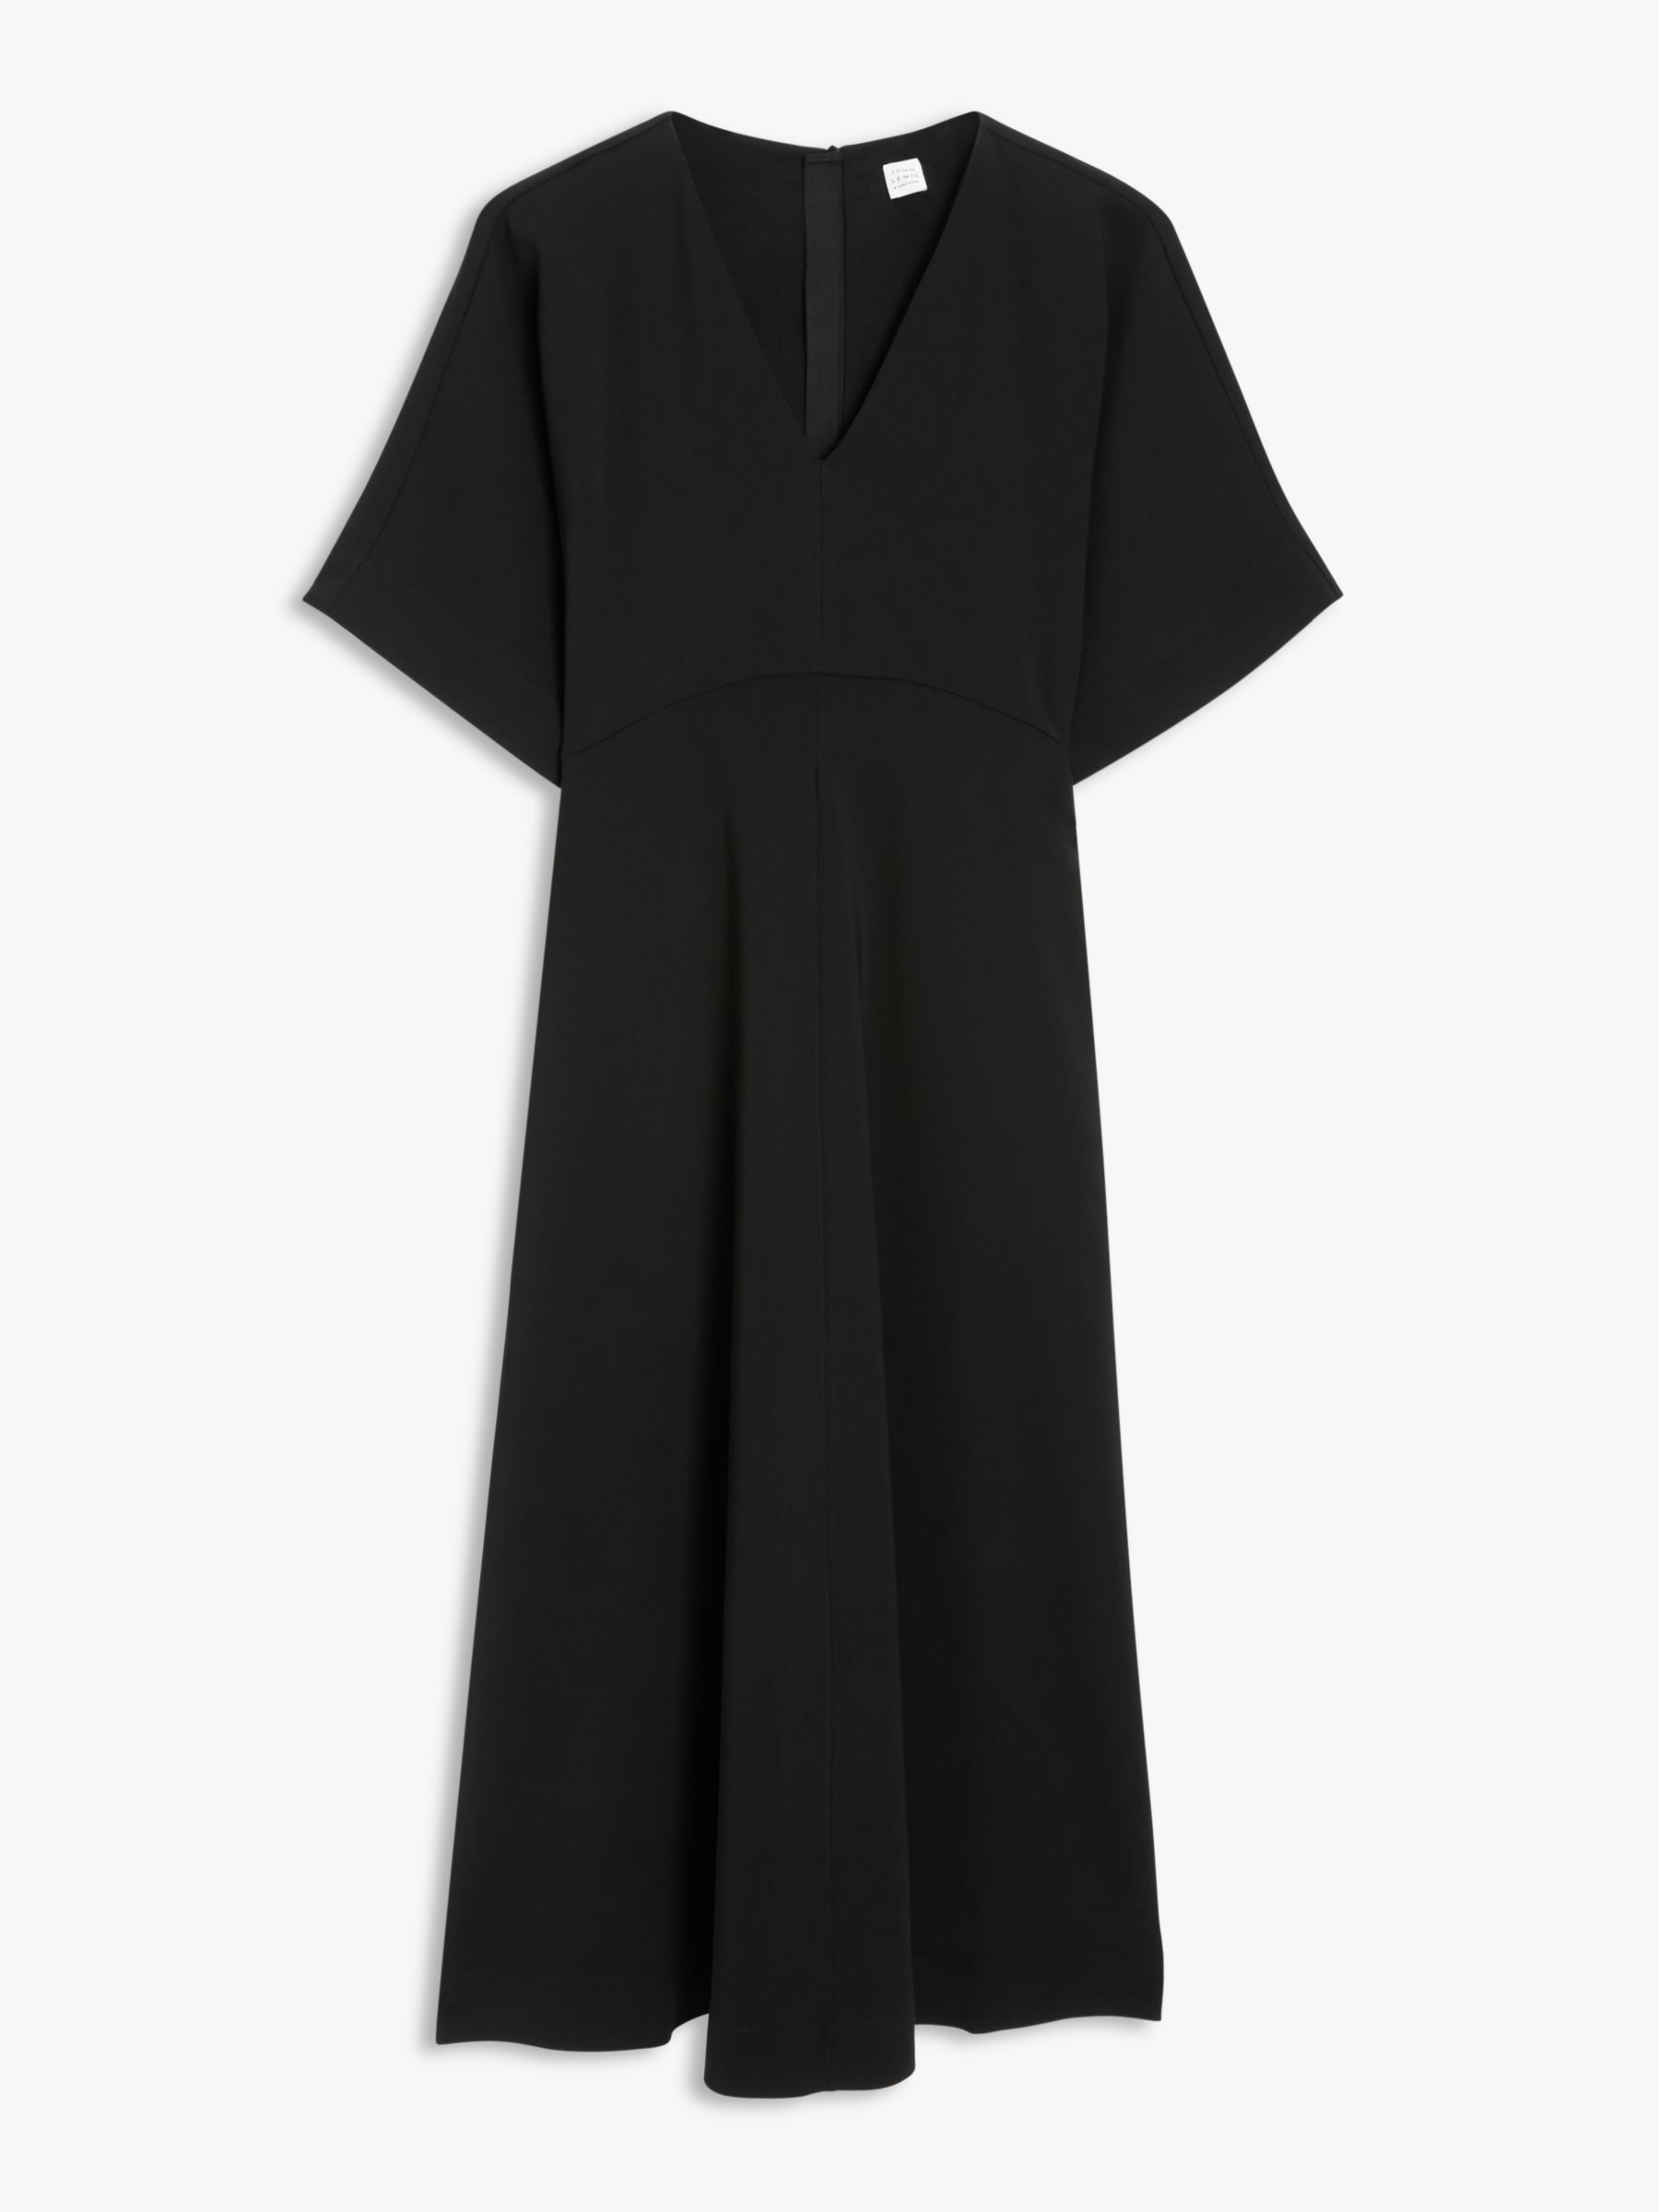 John Lewis V-Neck Dress, Black, 8